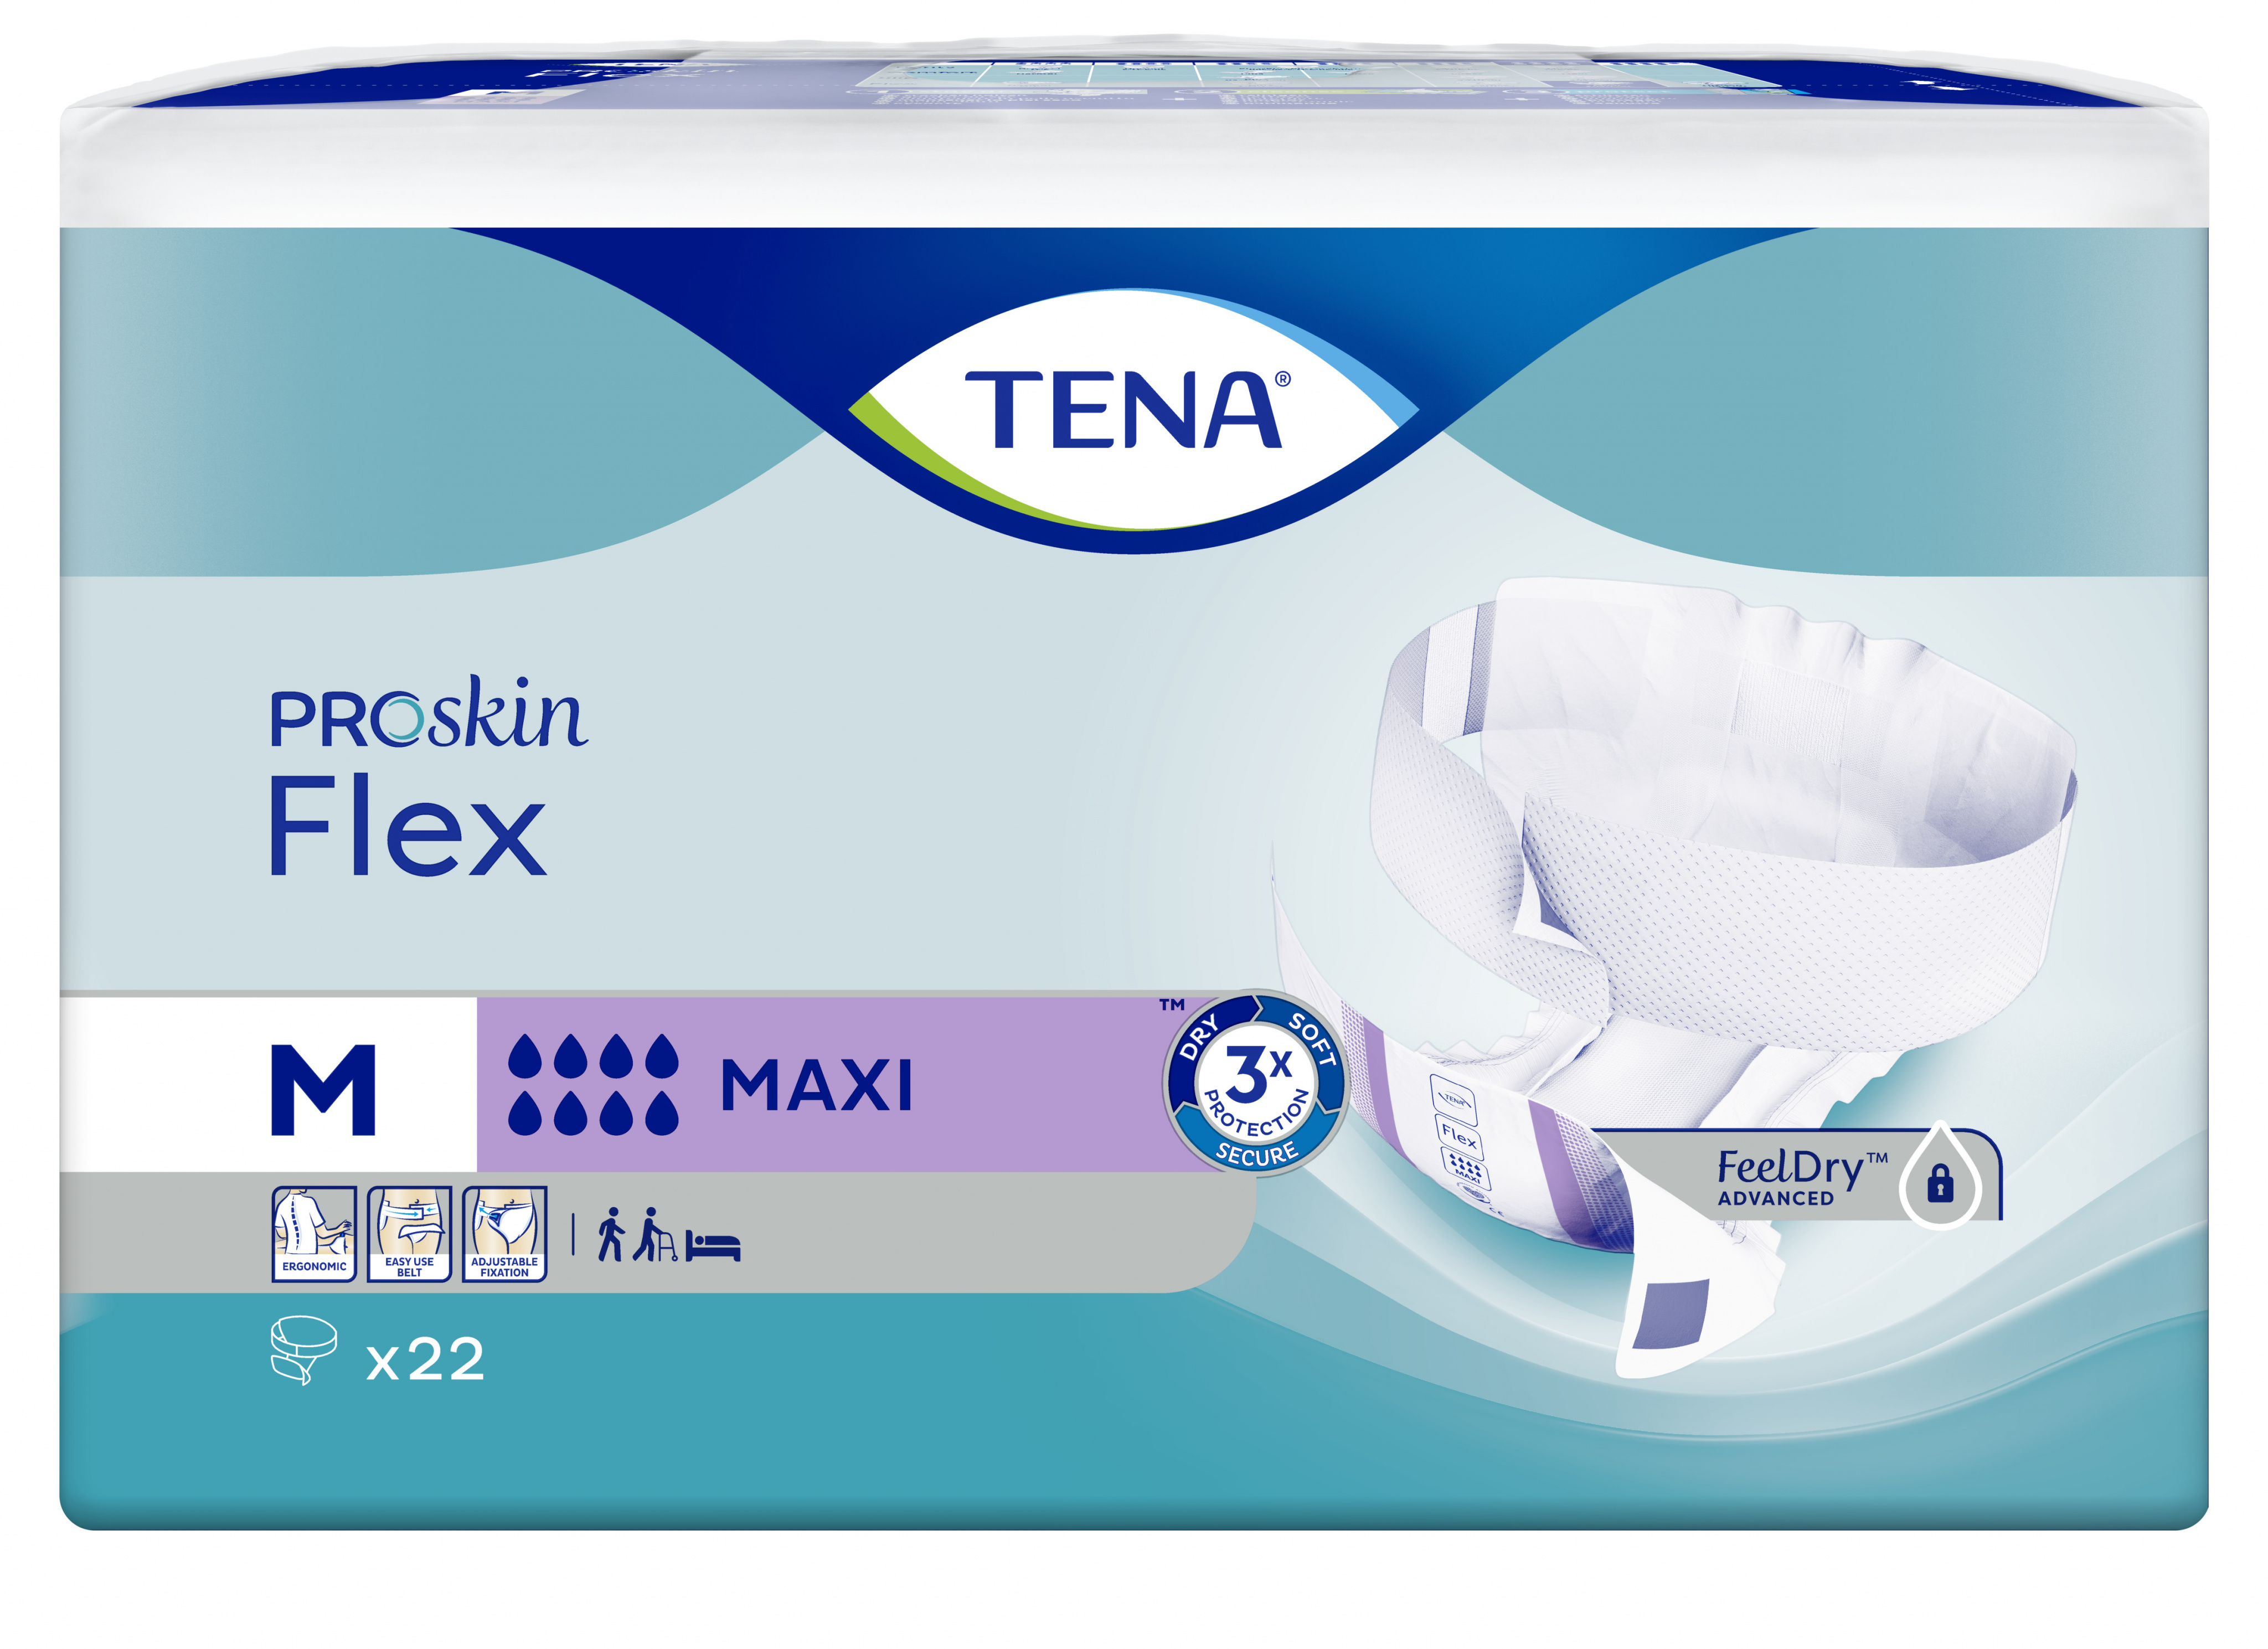 TENA PROskin Flex Maxi Medium 22s